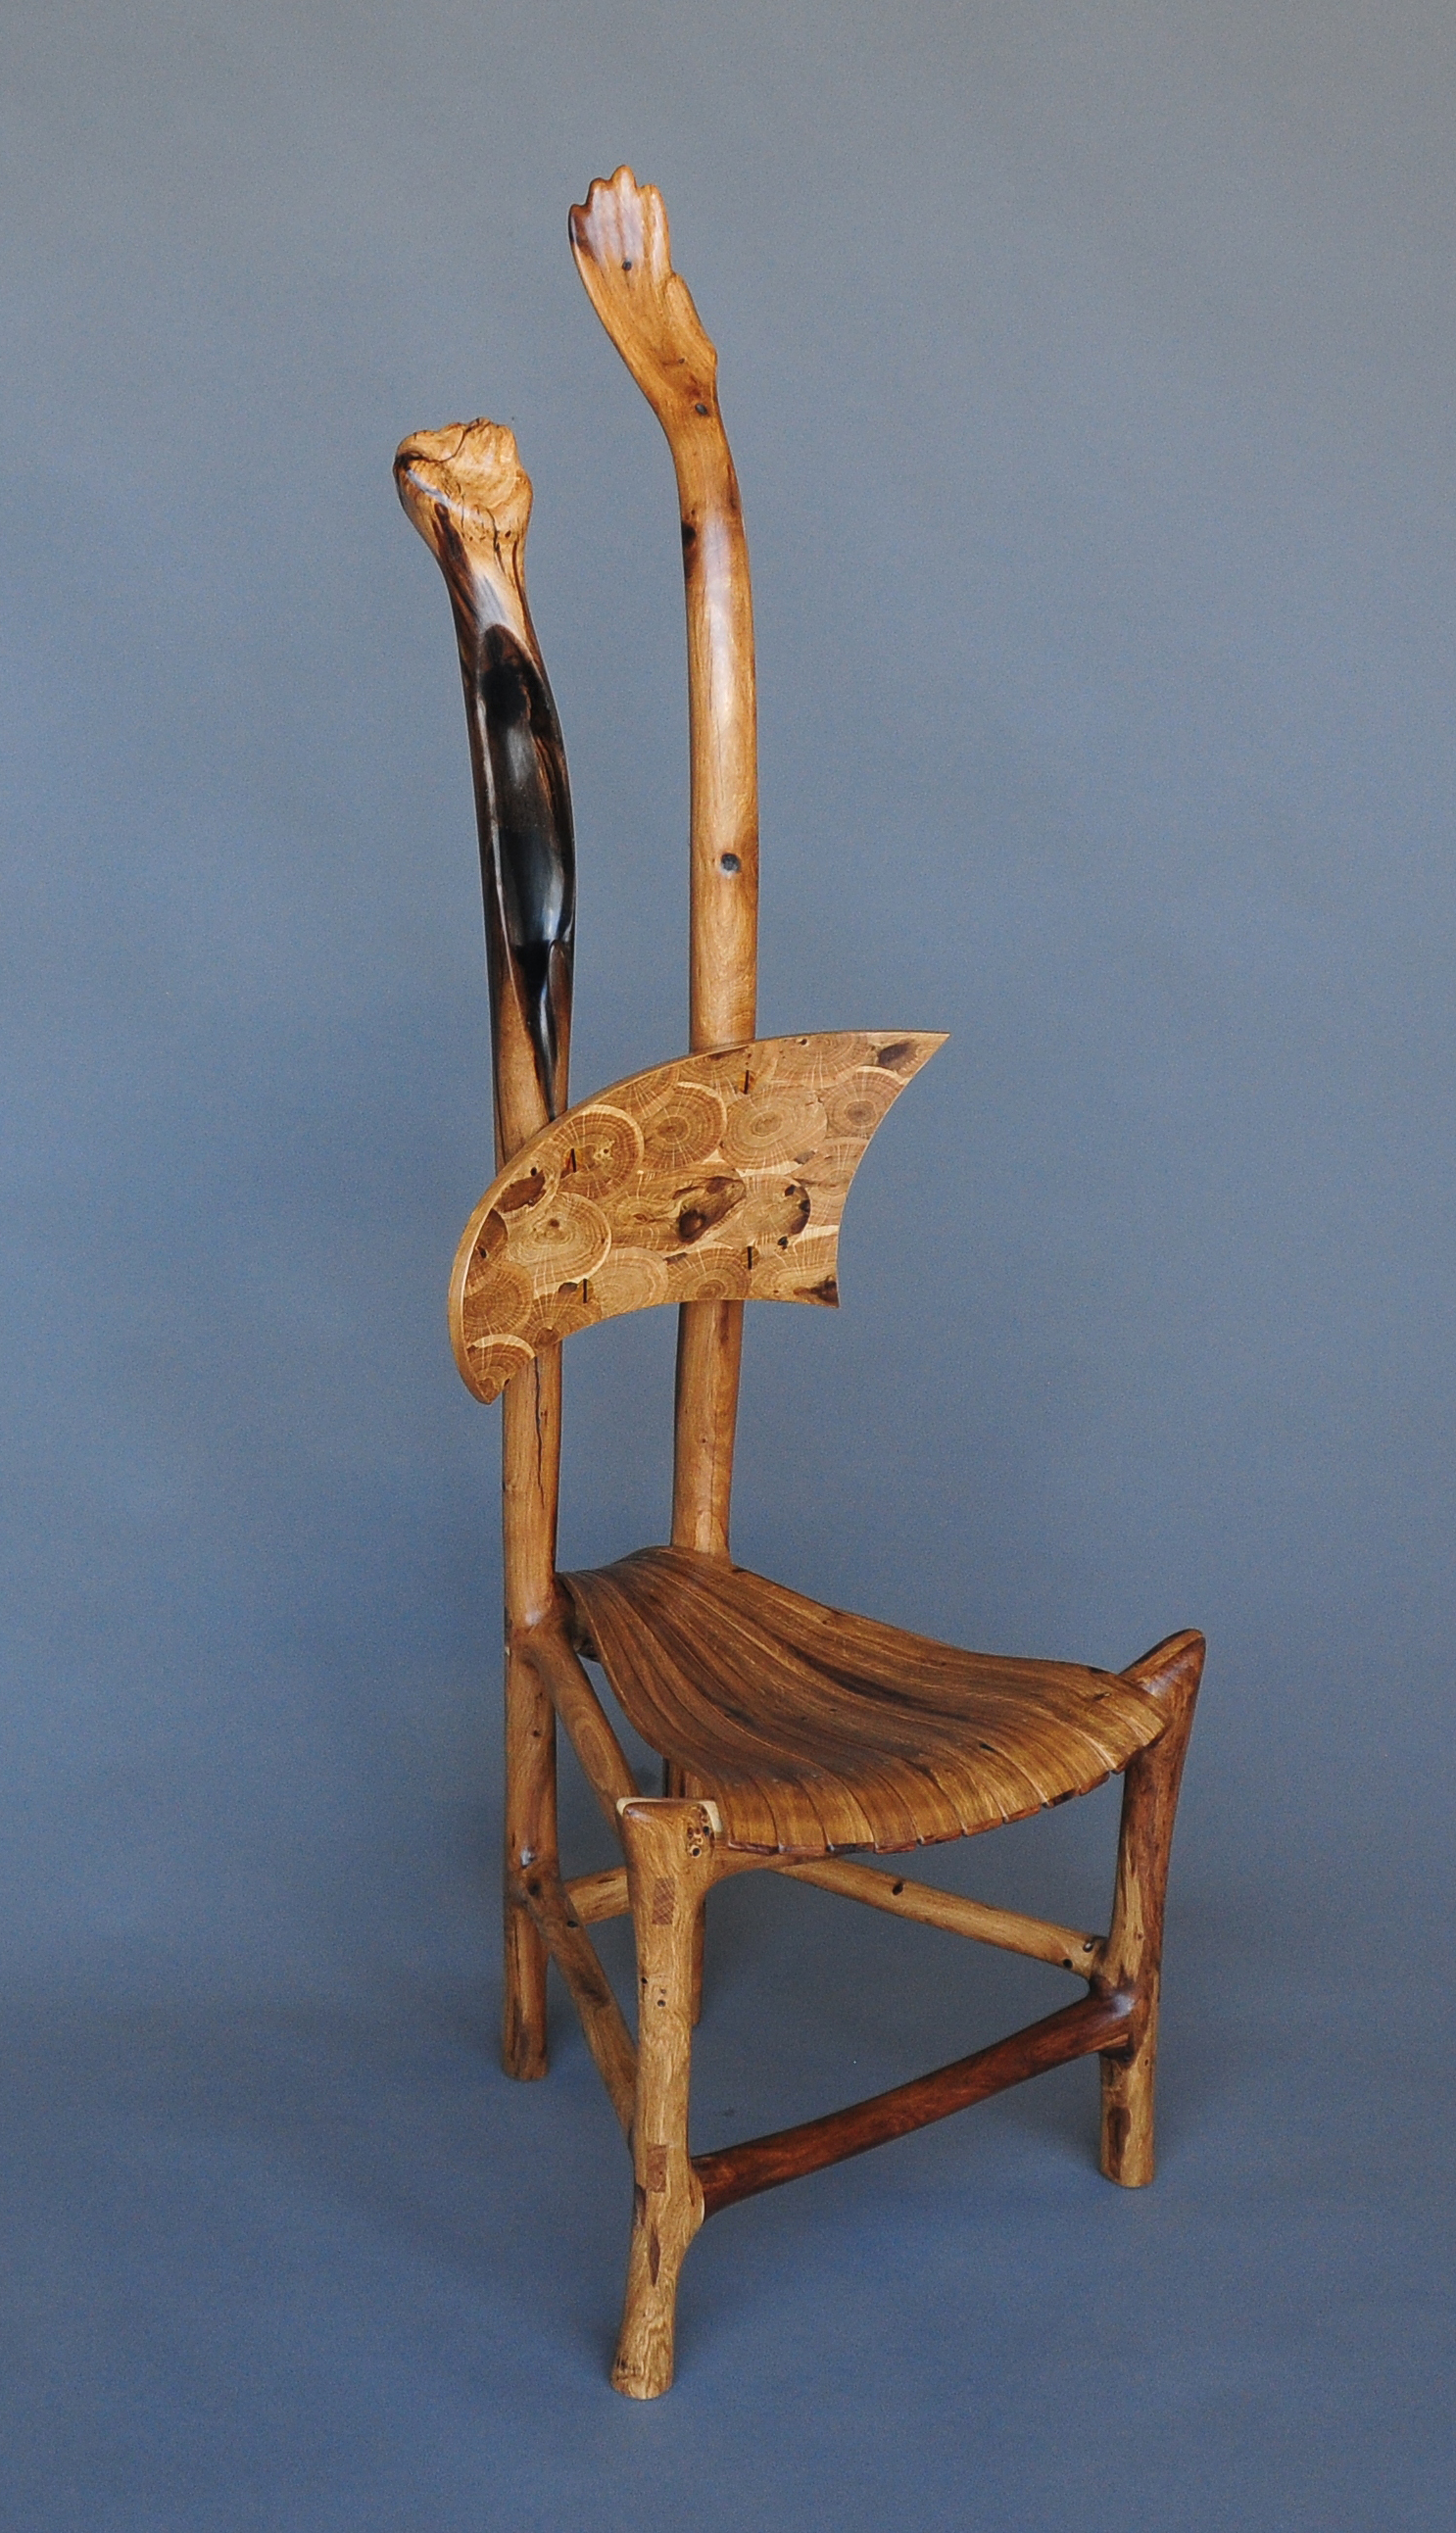 Chair - entitled "Sit!"